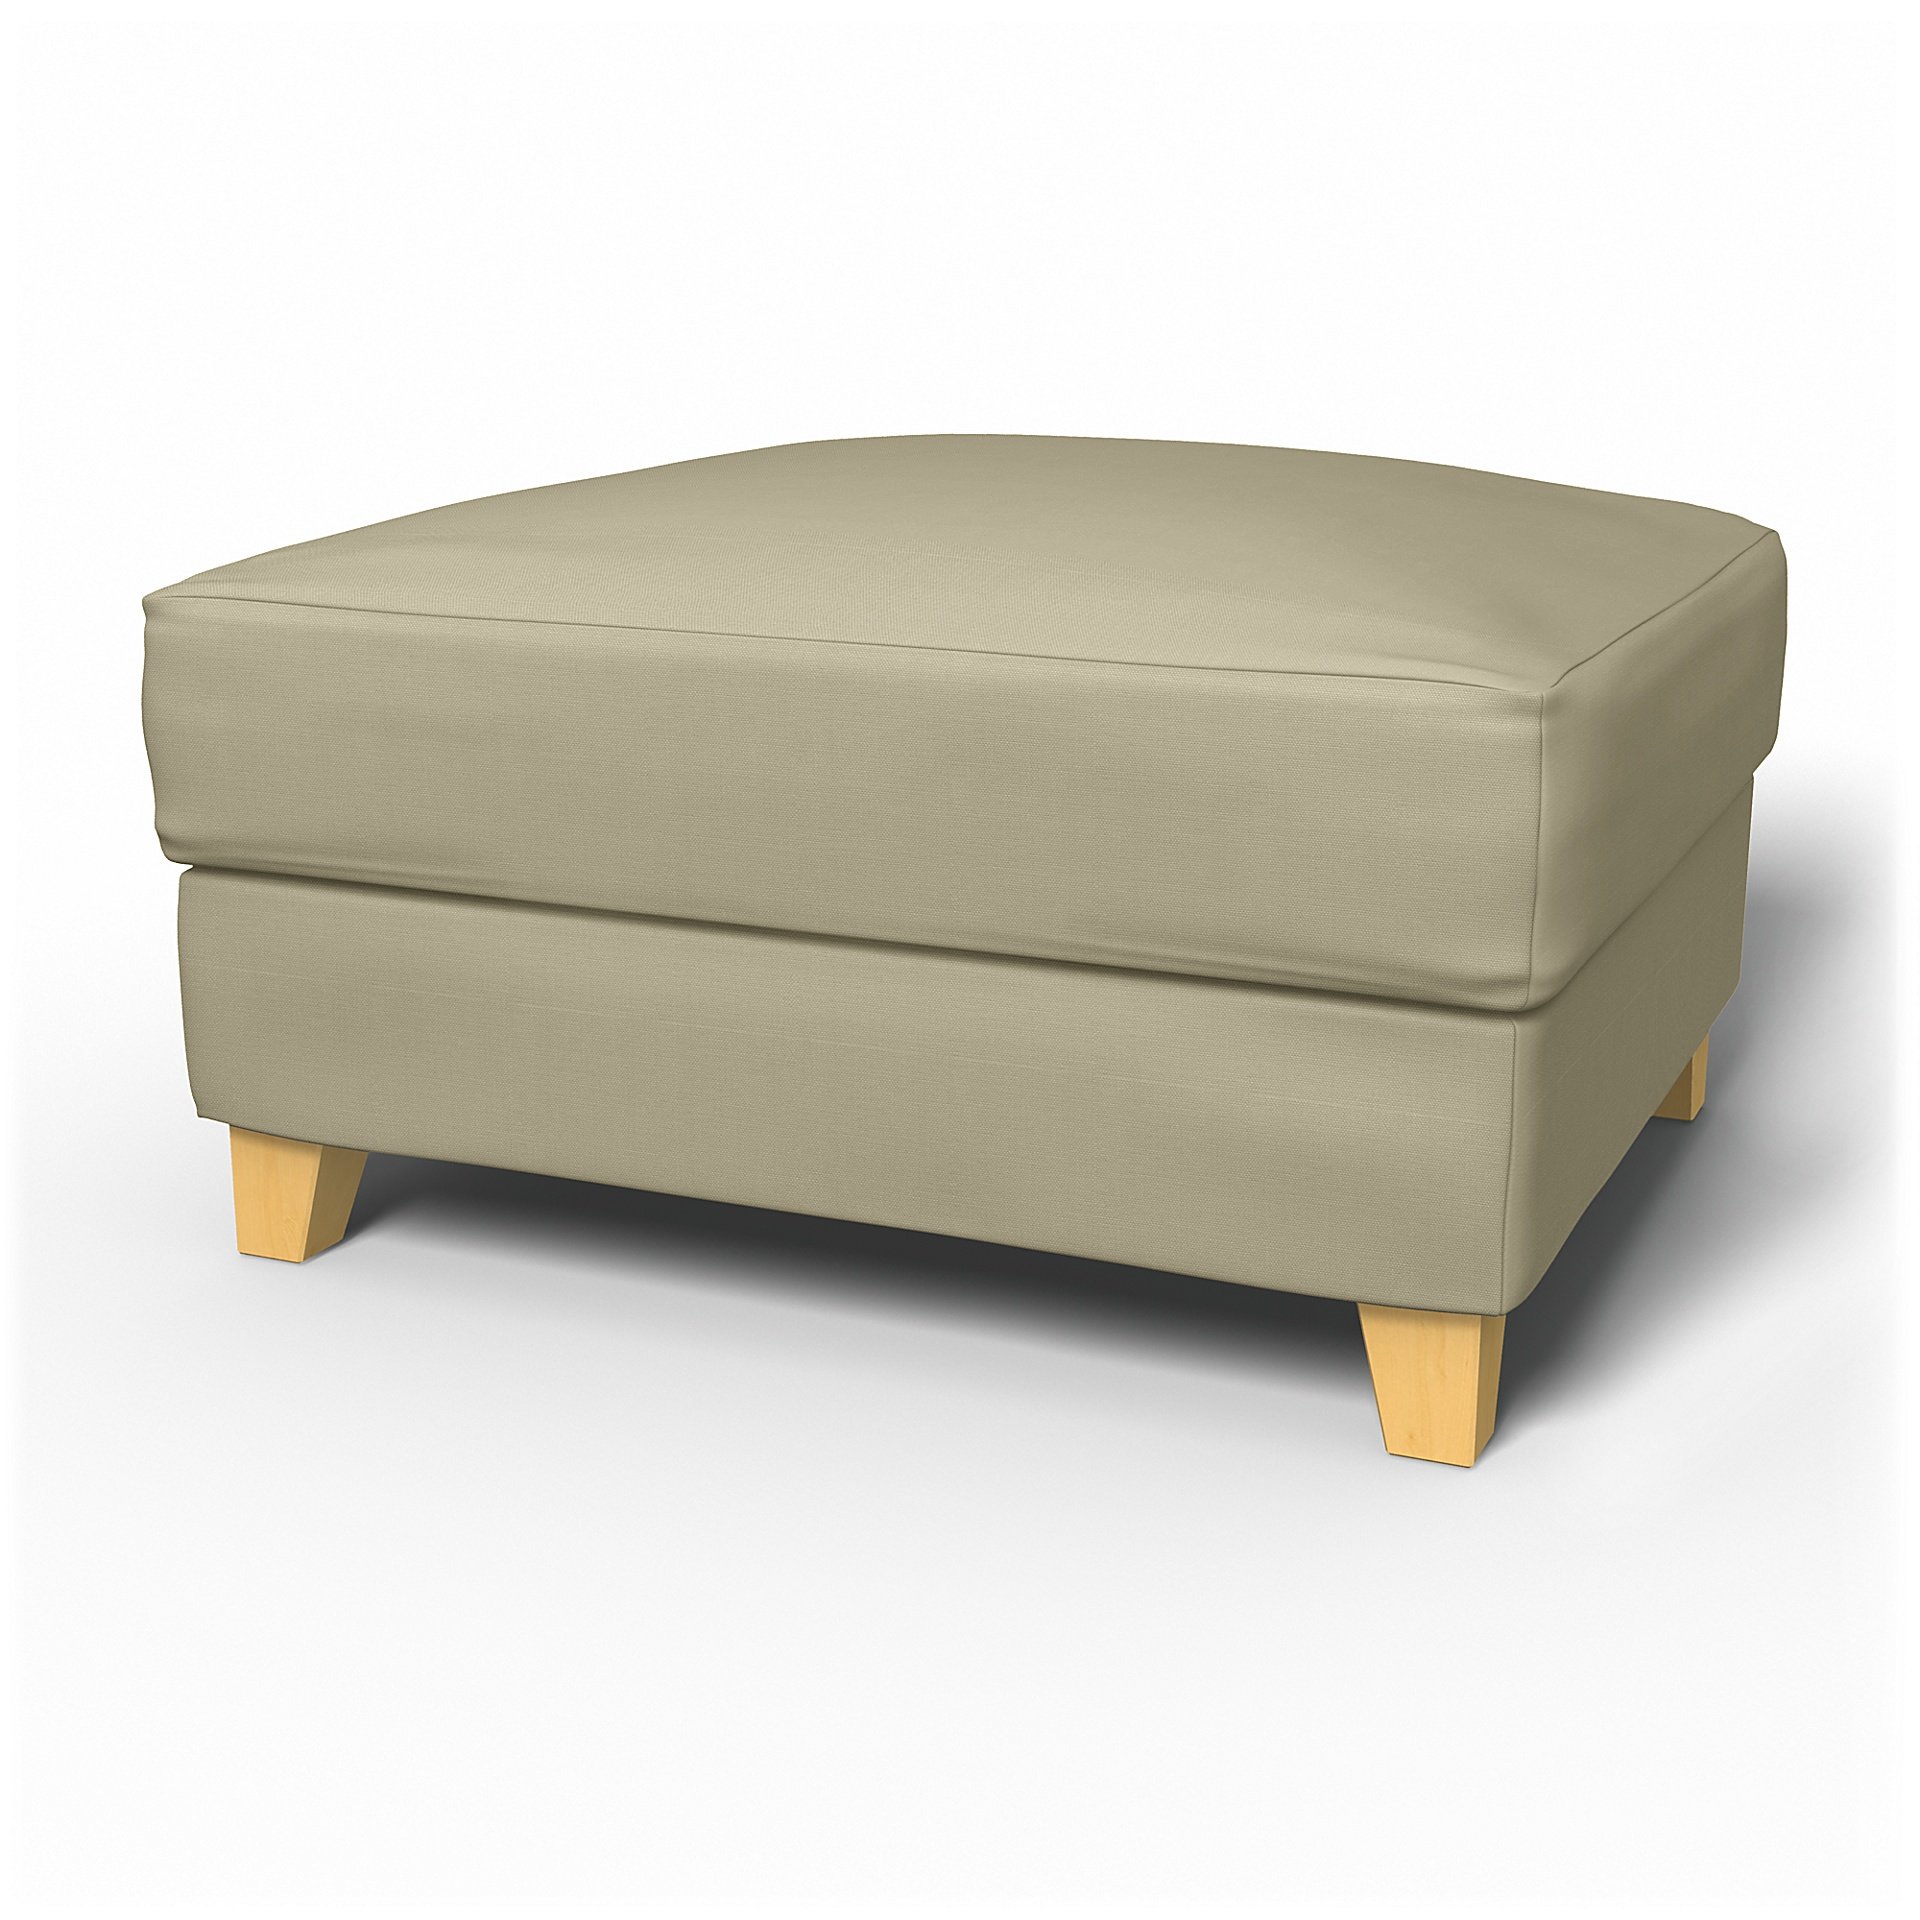 IKEA - Backa Footstool Cover, Sand Beige, Cotton - Bemz